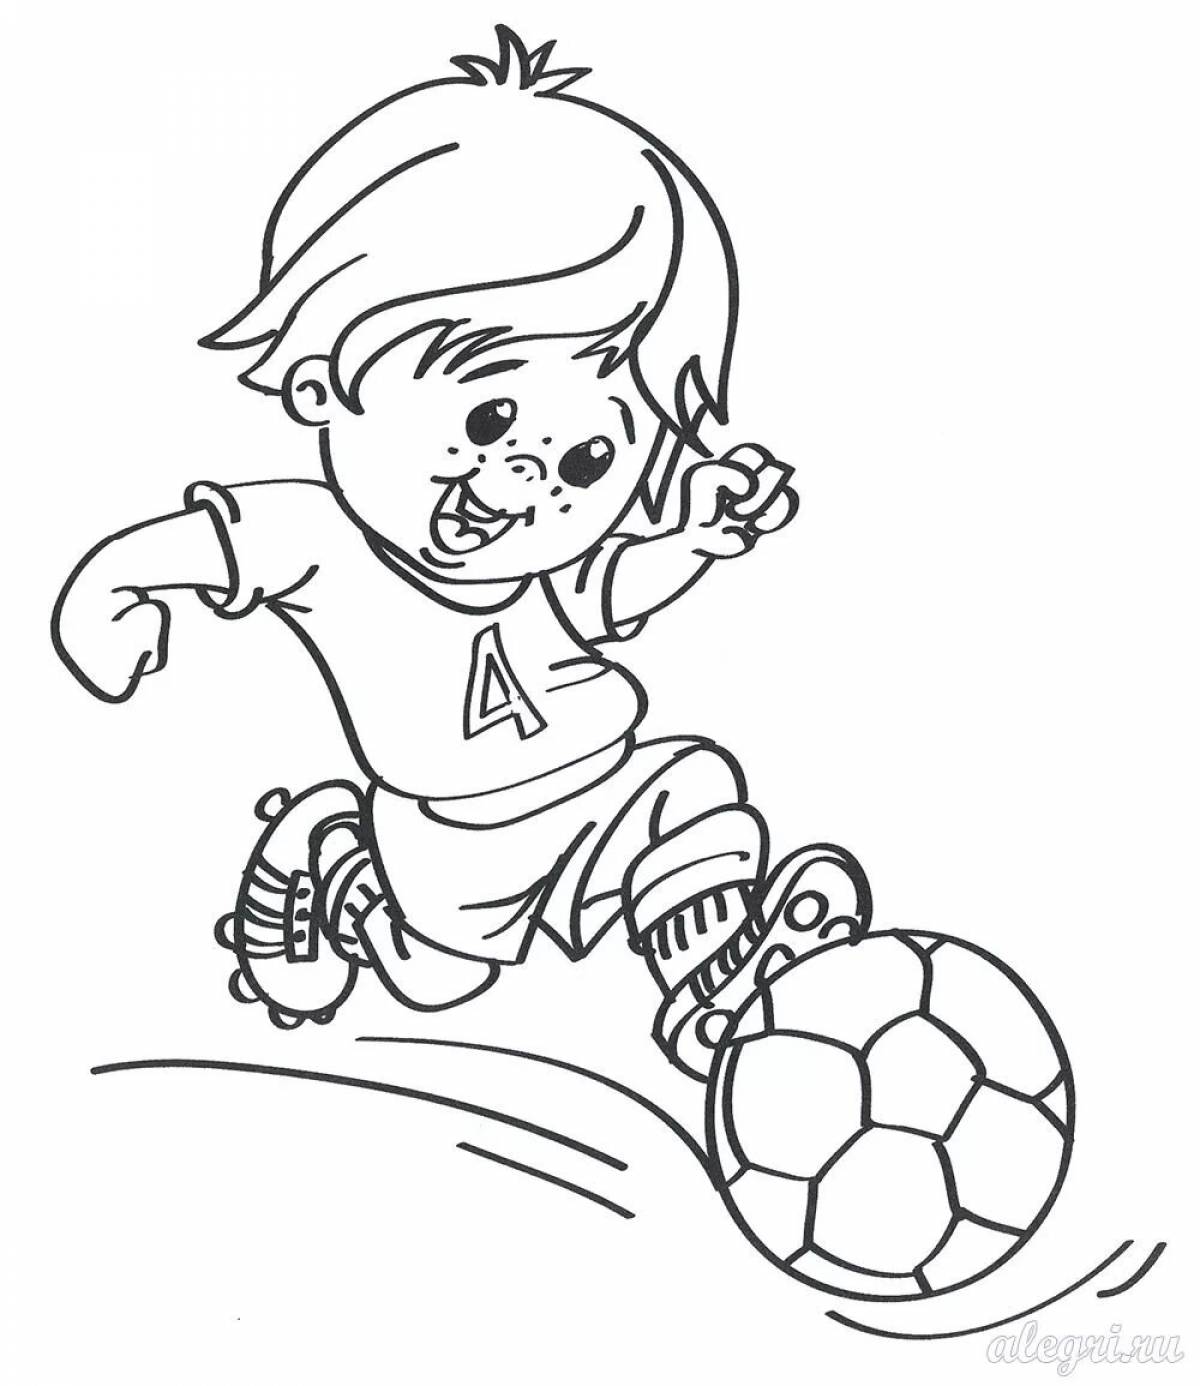 Color-frenzy sports coloring page для детей 3-4 лет